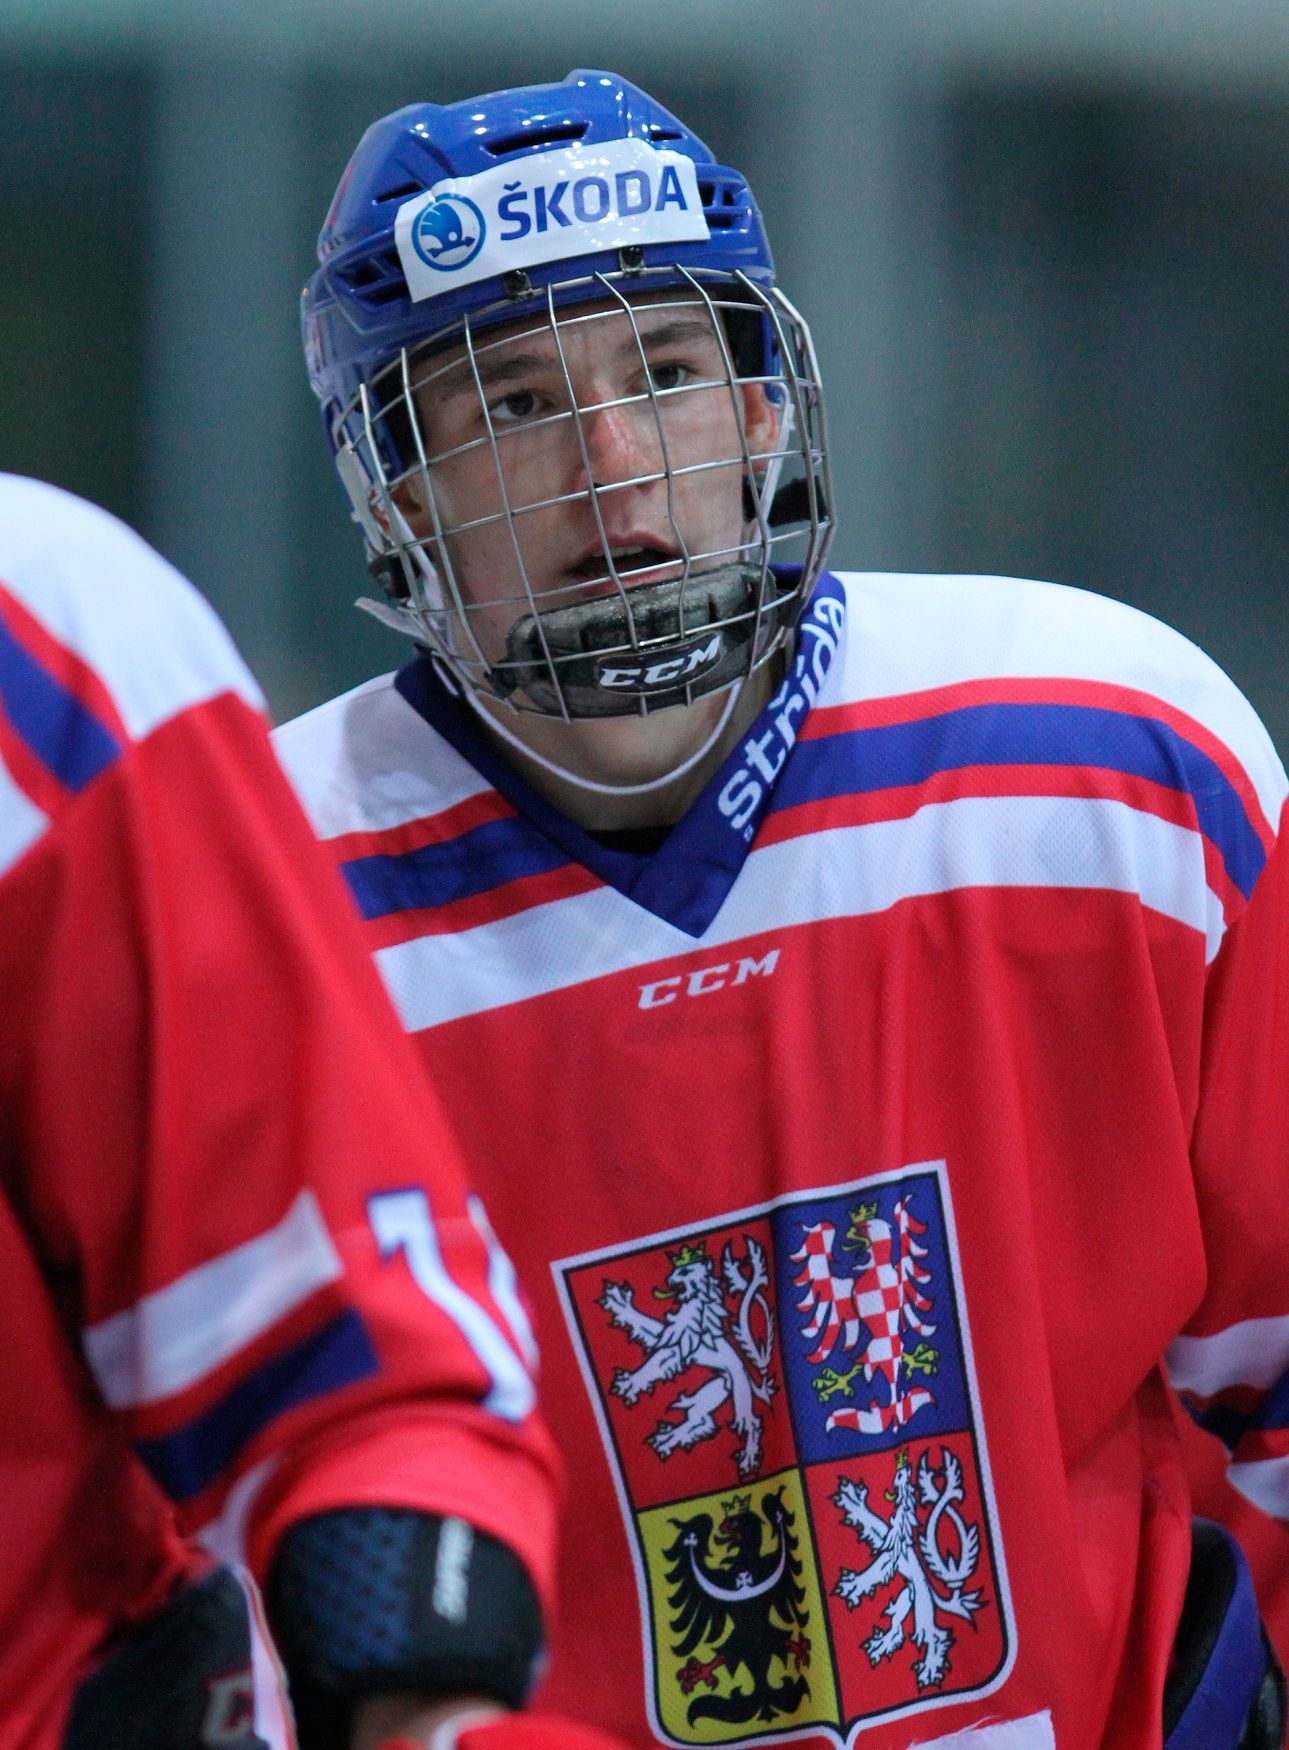 Libor Hájek, U18 Ivan Hlinka Memorial Cup 2015